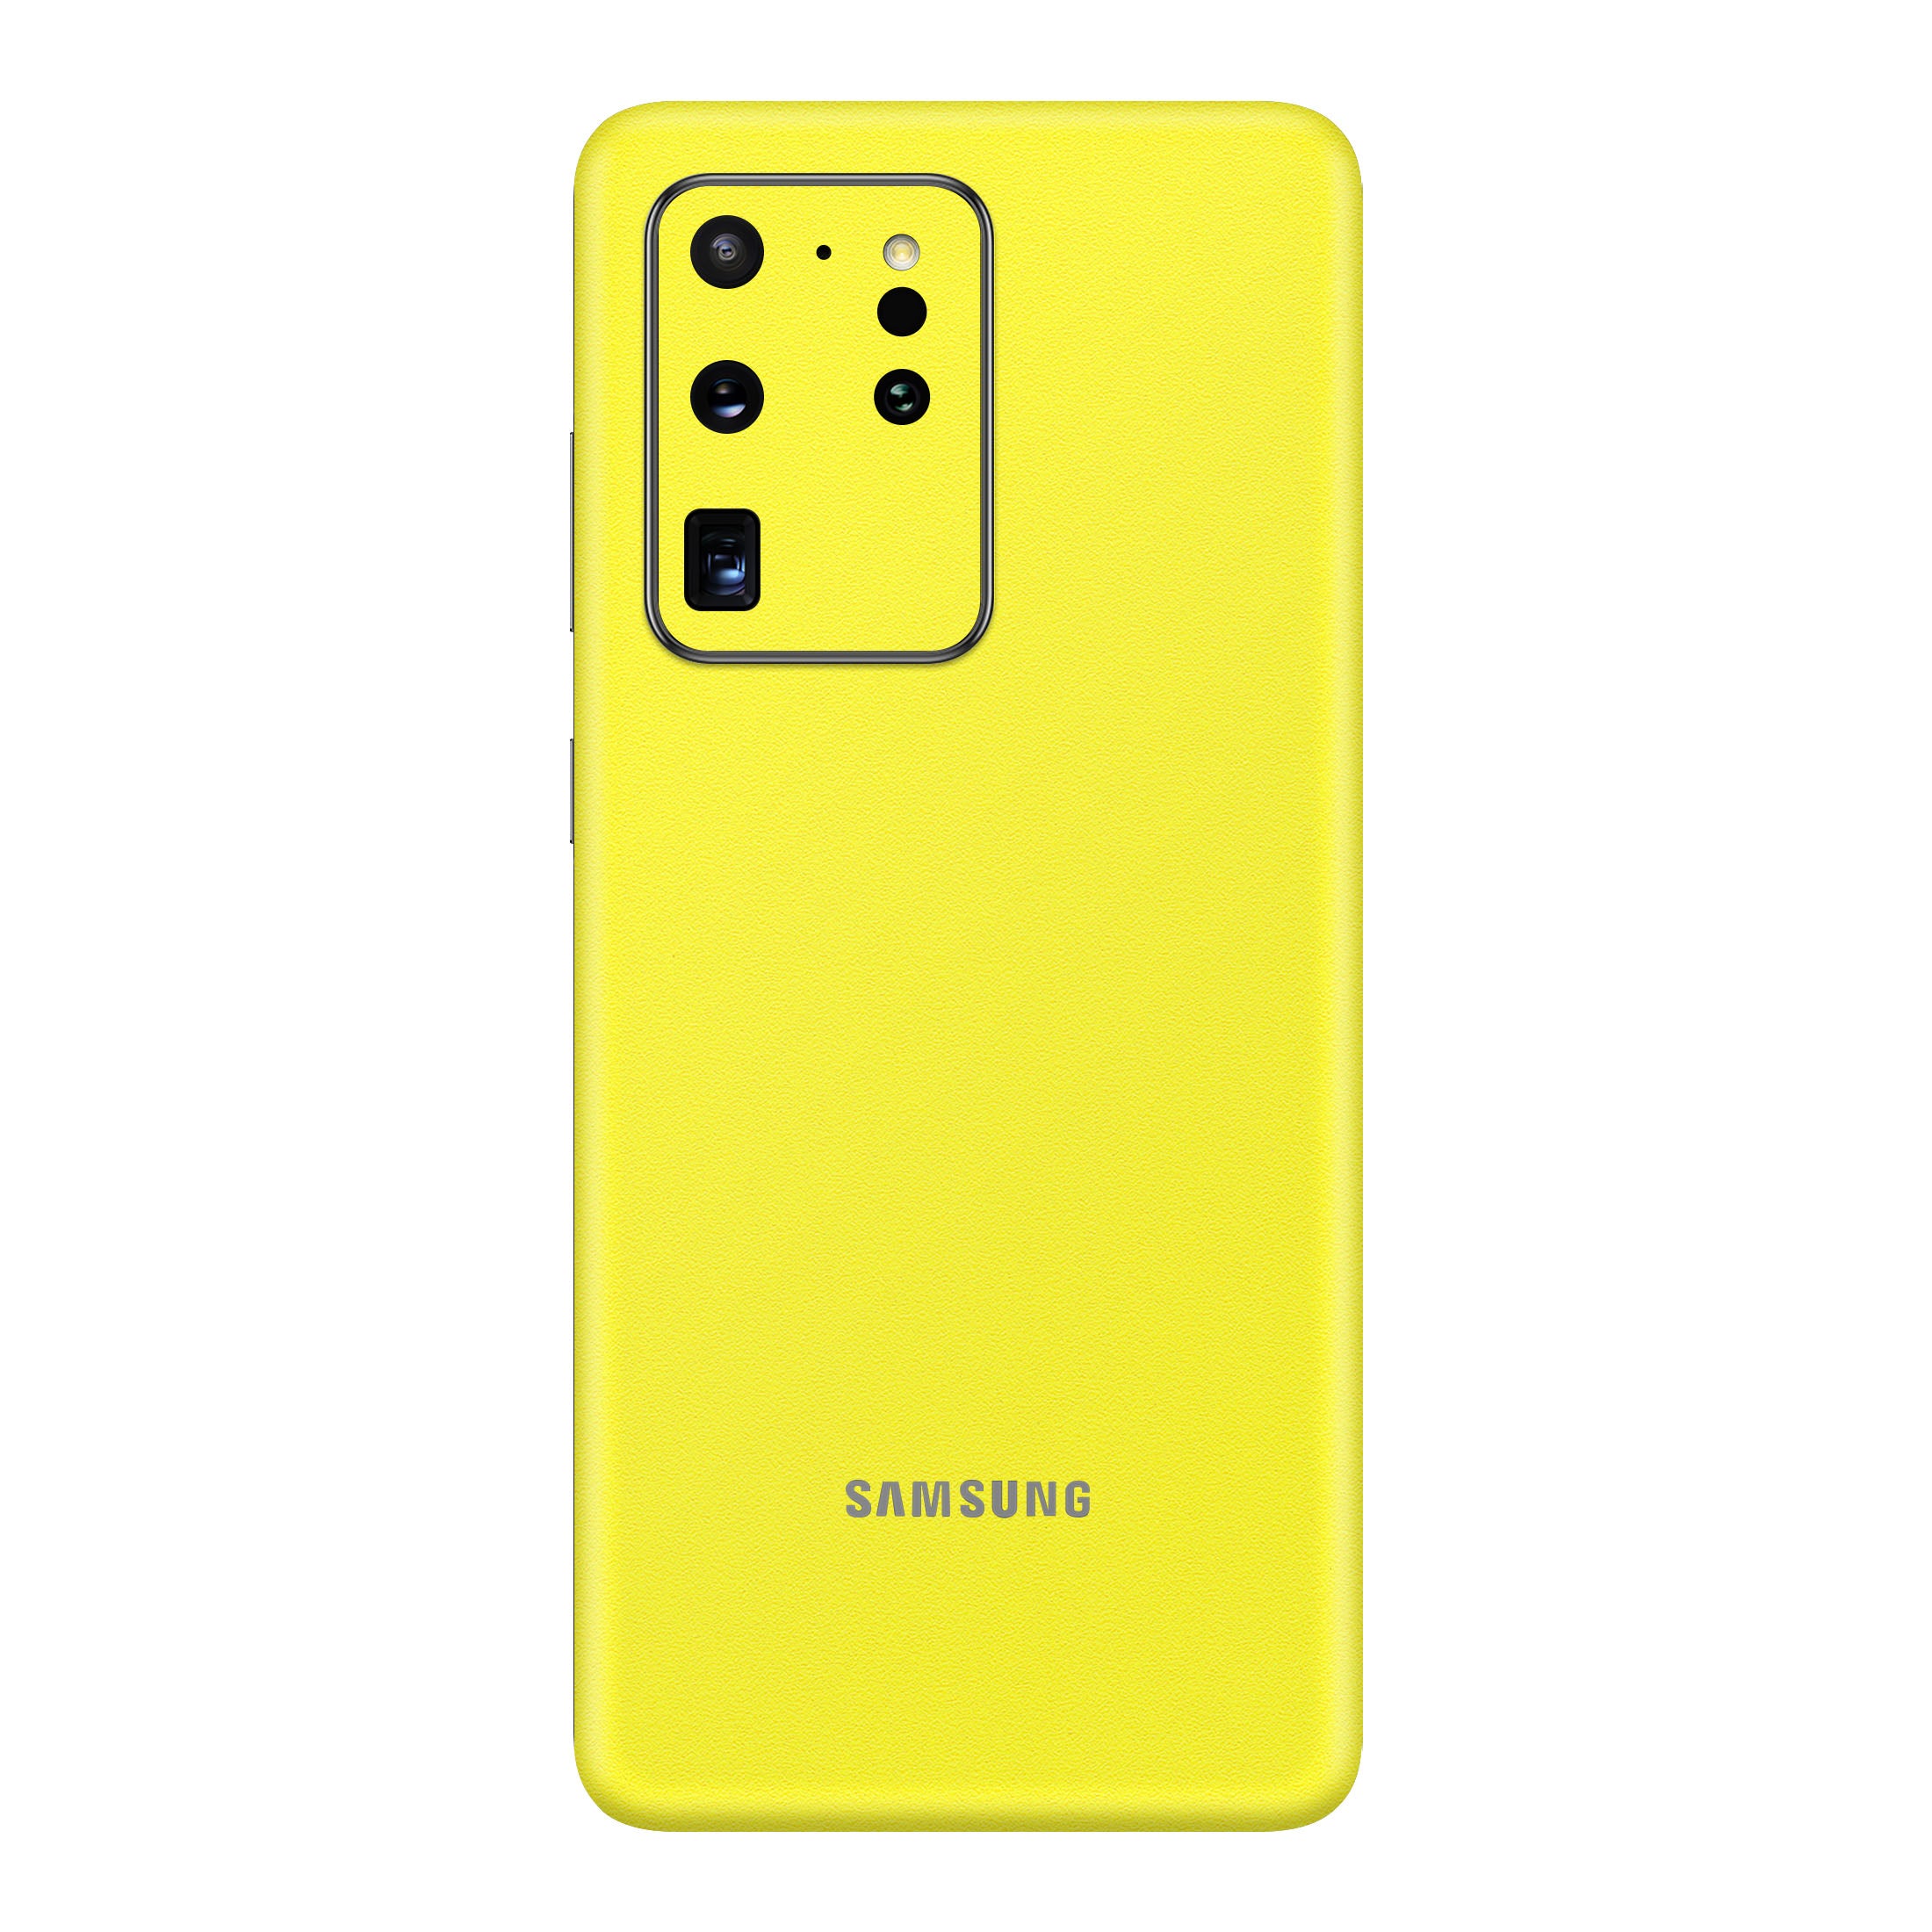 Gloss Yellow Skin for Samsung S20 Ultra